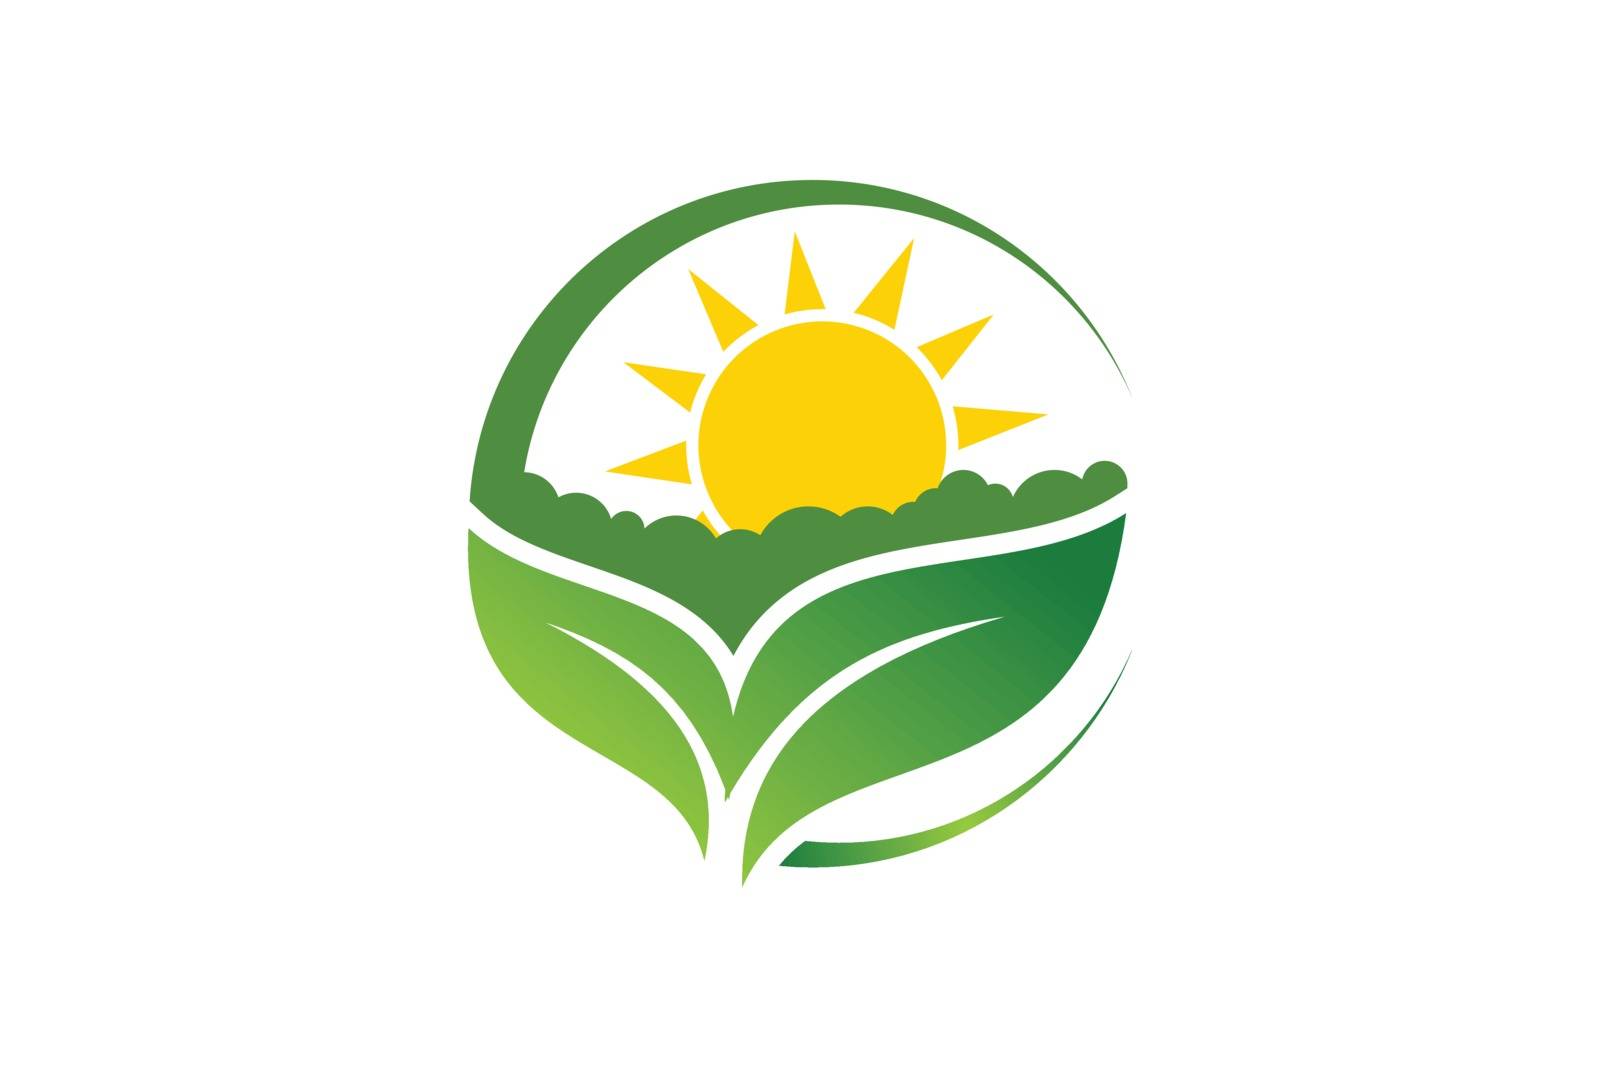 Farm House concept logo Template with farm landscape Label for natural farm products